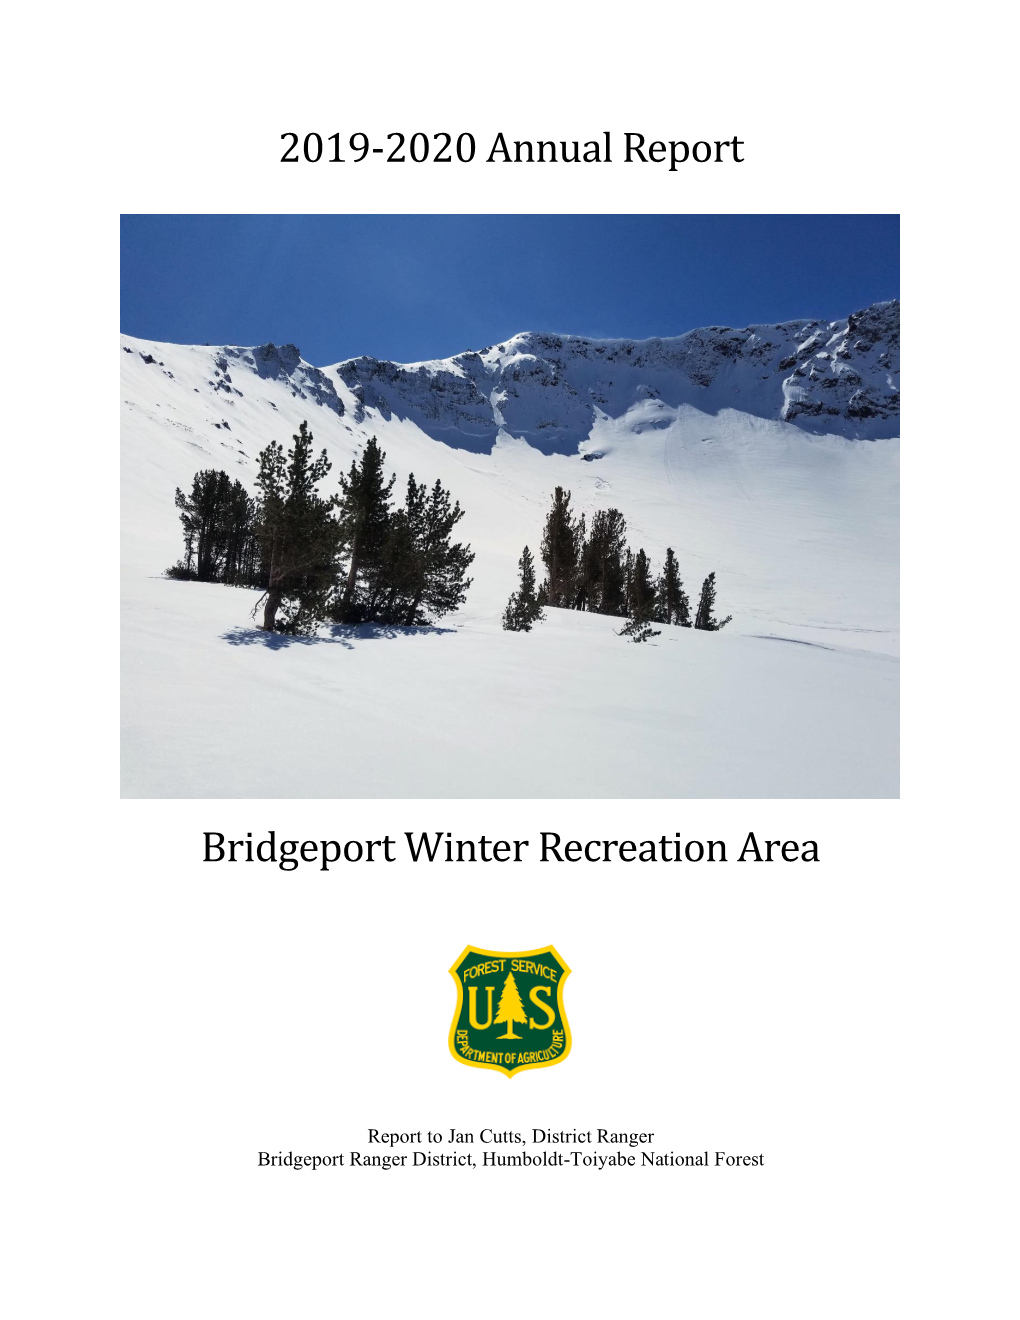 2019-2020 Annual Report Bridgeport Winter Recreation Area